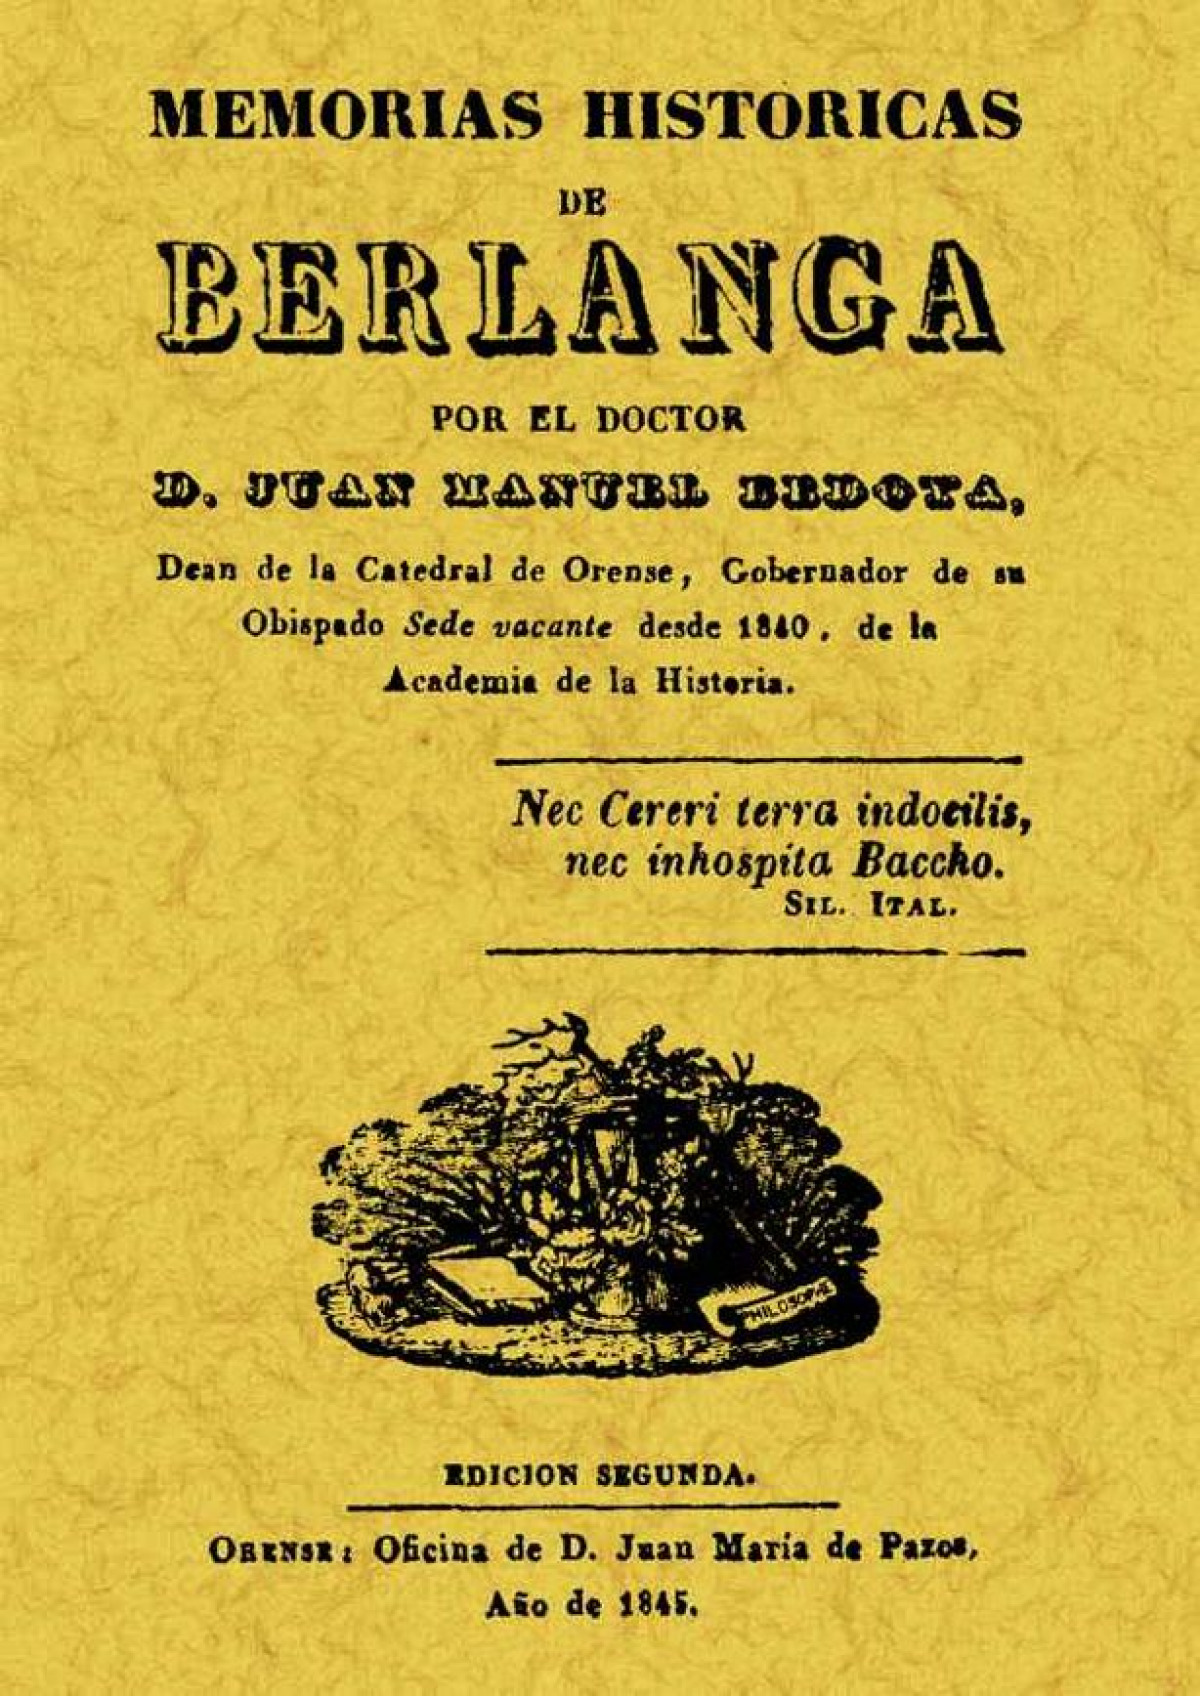 Memorias históricas de Berlanga - Bedoya, Juan Manuel